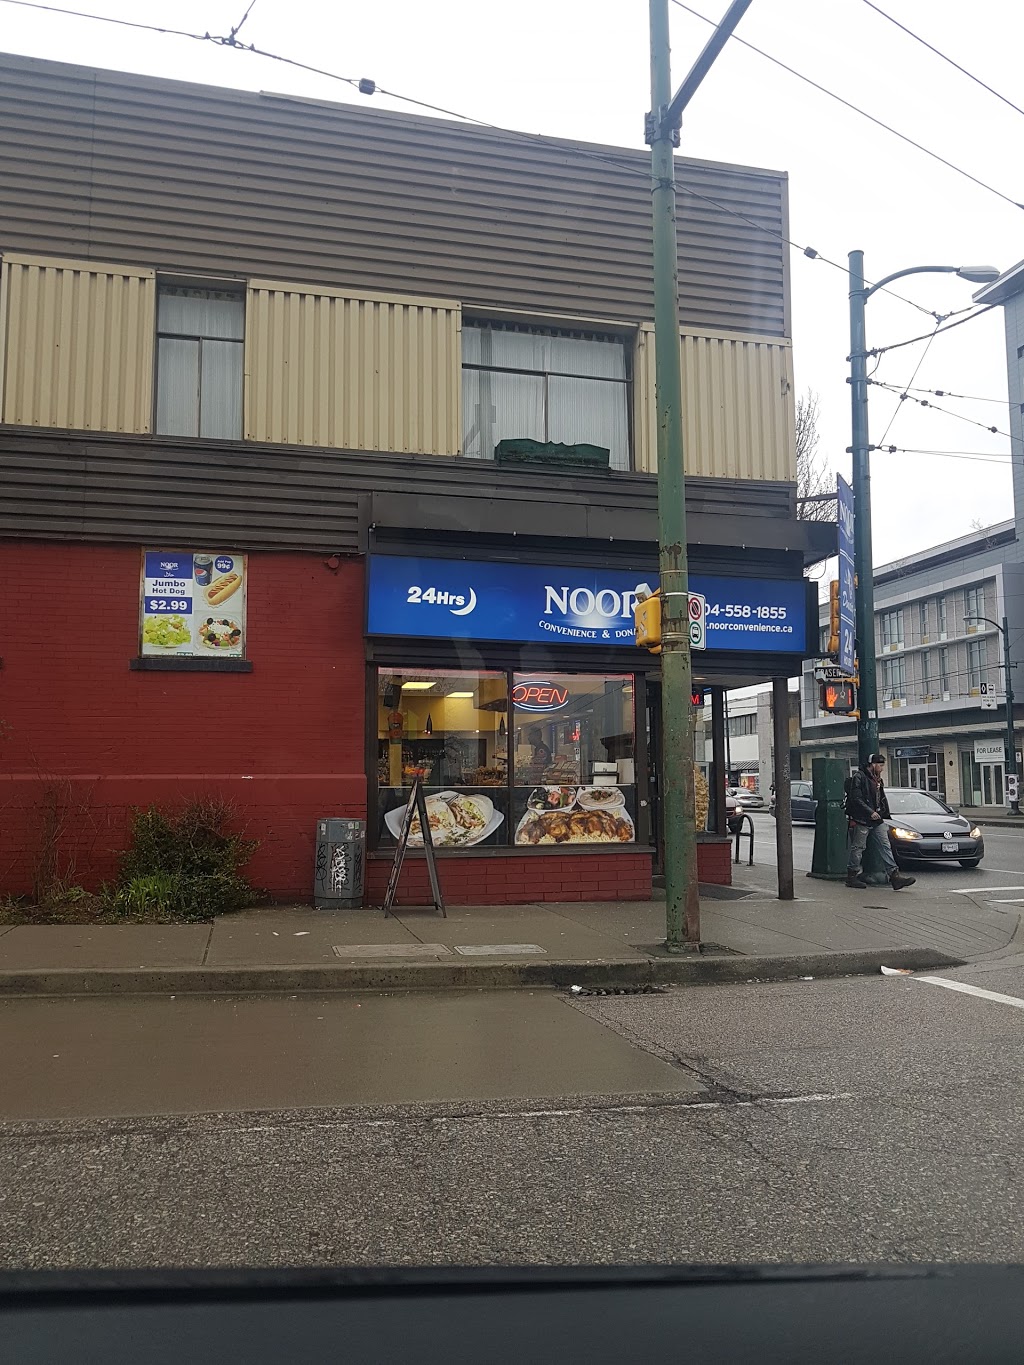 Noor Convenience & Donair | convenience store | 680 E Broadway, Vancouver, BC V5T 1X6, Canada | 6045581855 OR +1 604-558-1855